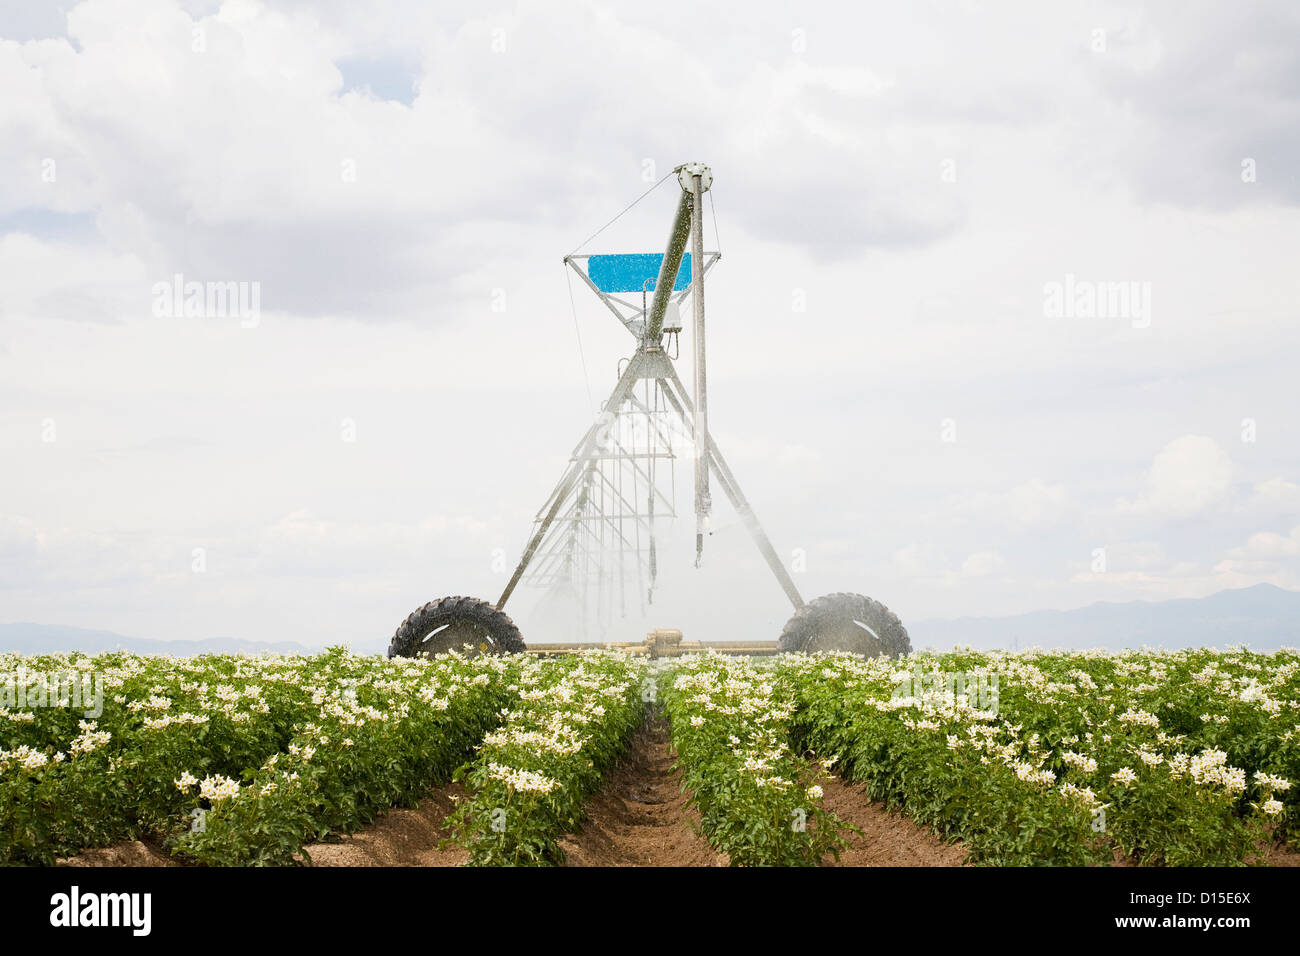 USA, Colorado, Sprinkler watering flowering potato plants Stock Photo